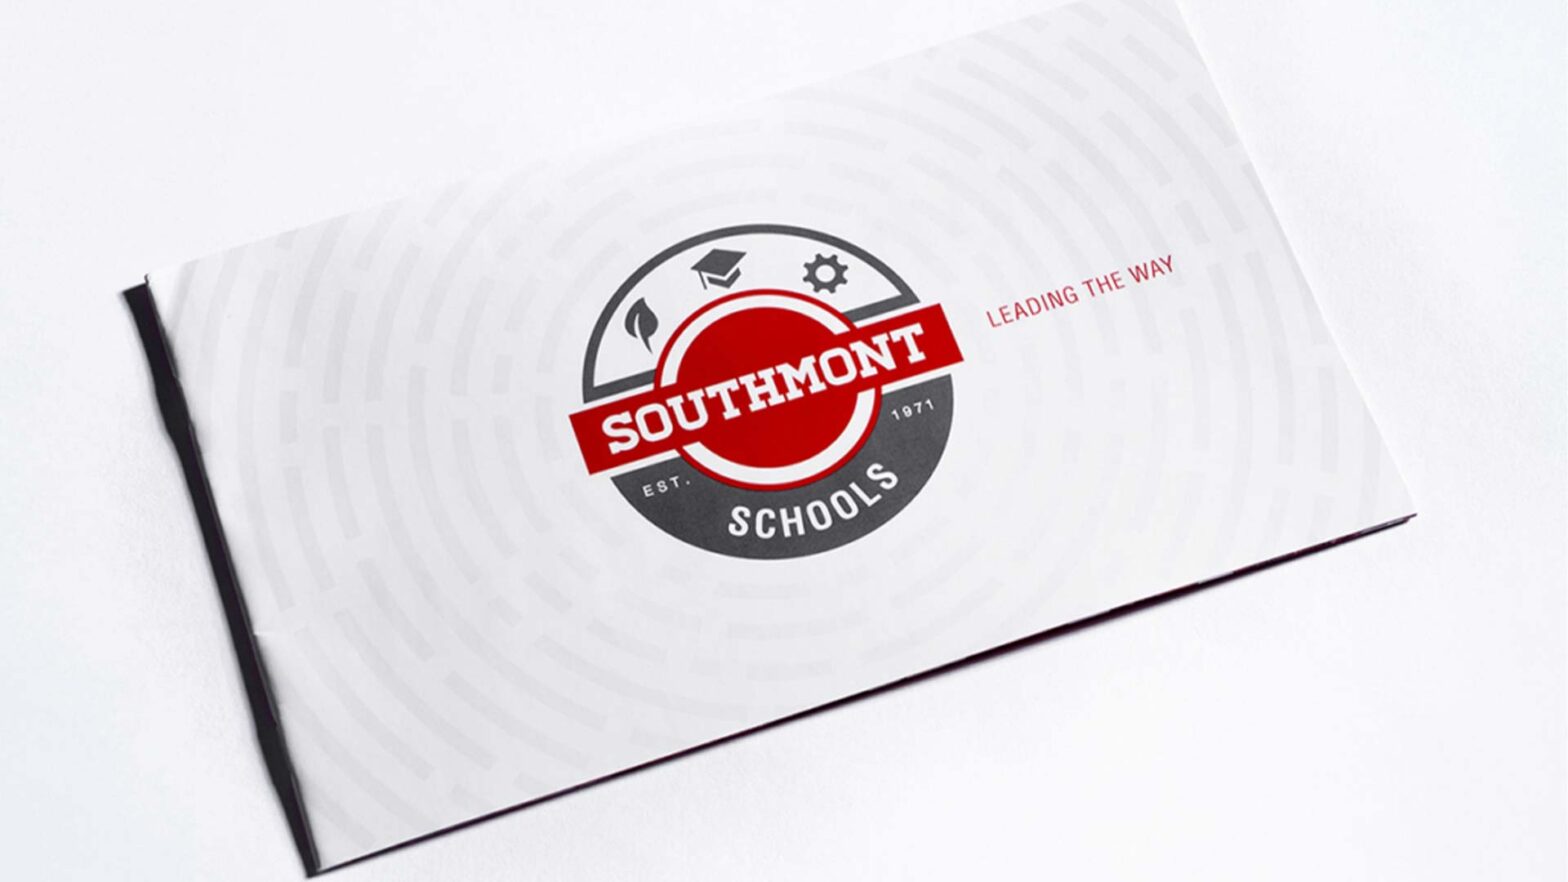 Southmont Schools mockup